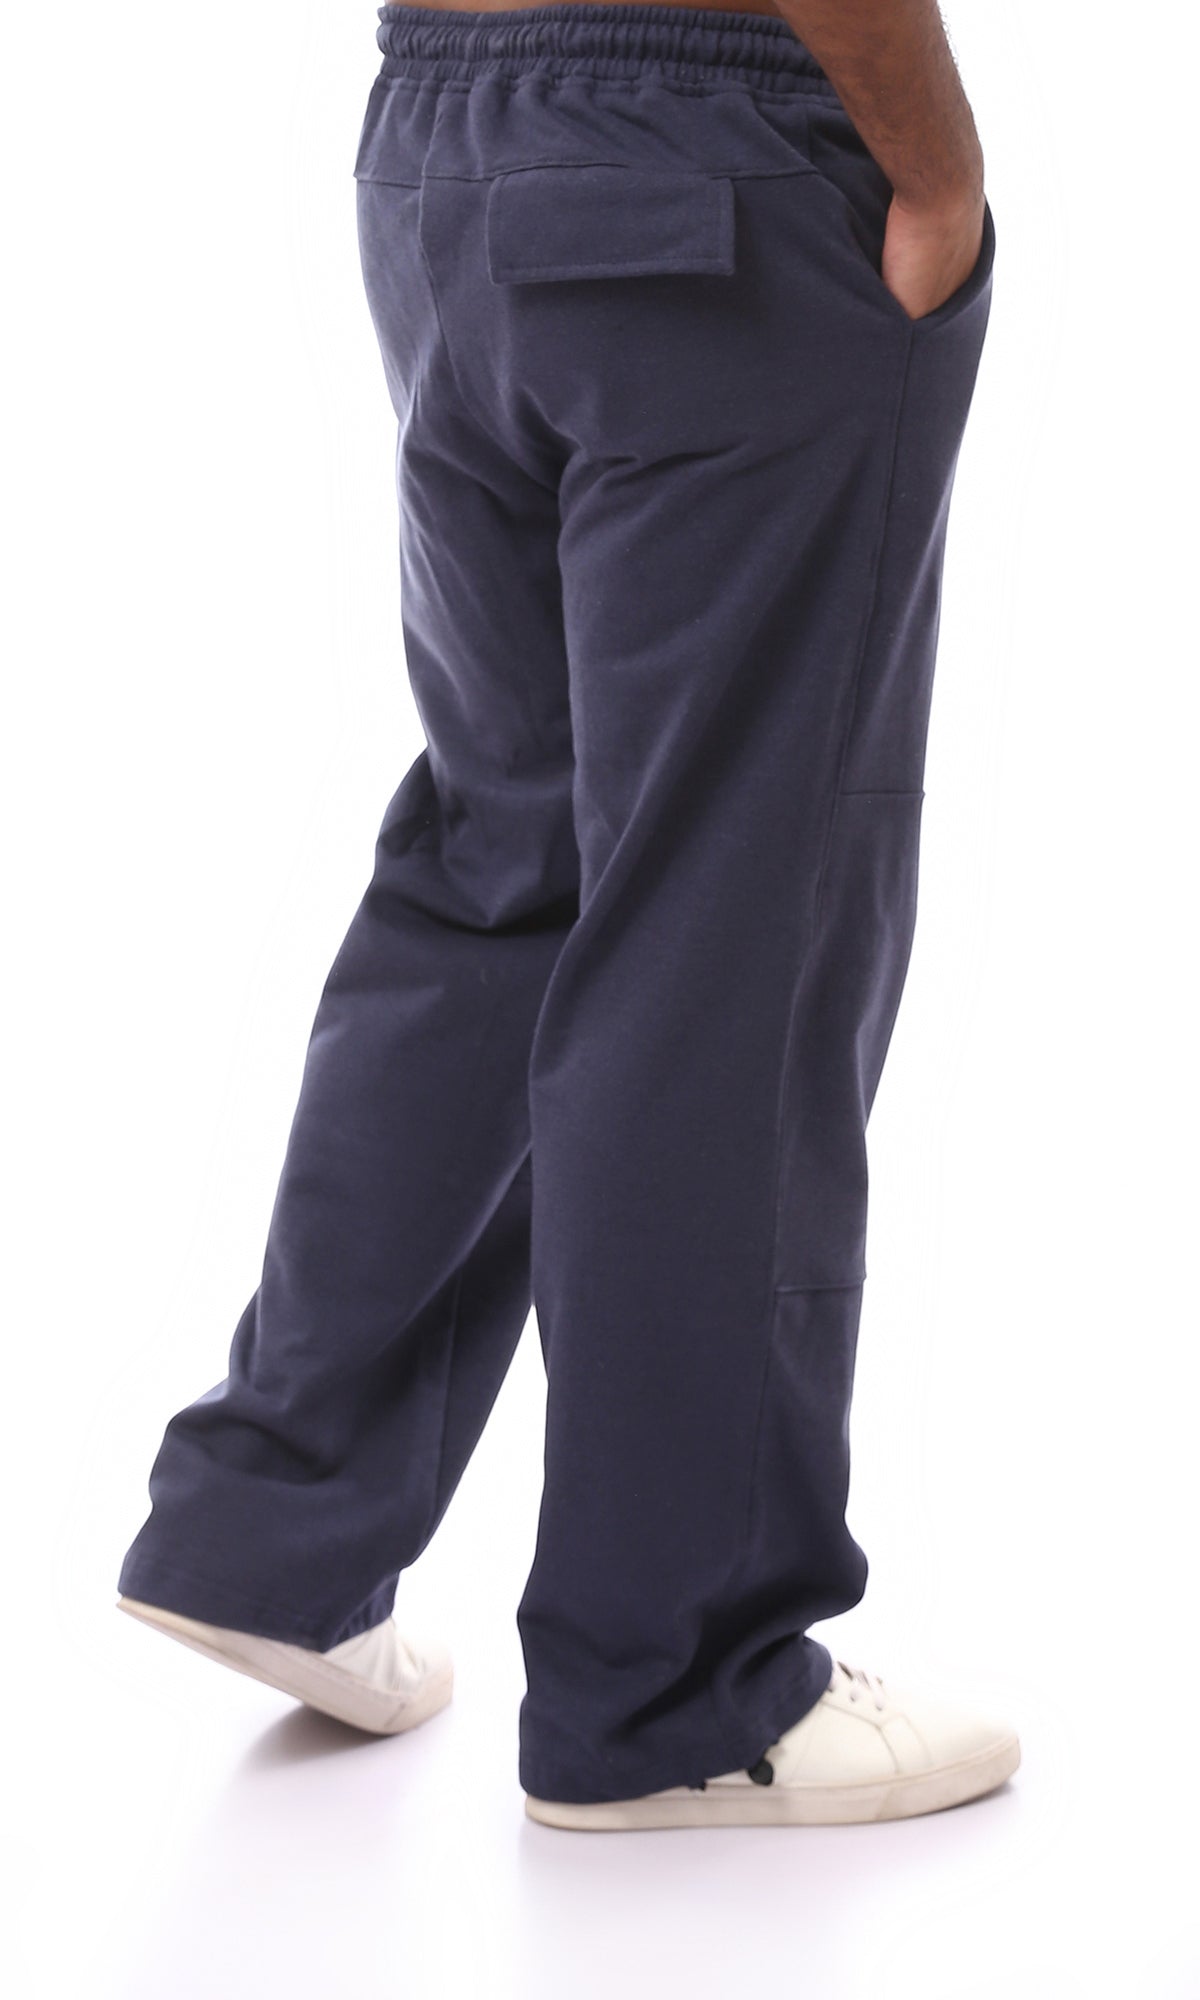 O174891 Slip On Heather Navy Blue Comfy Pants